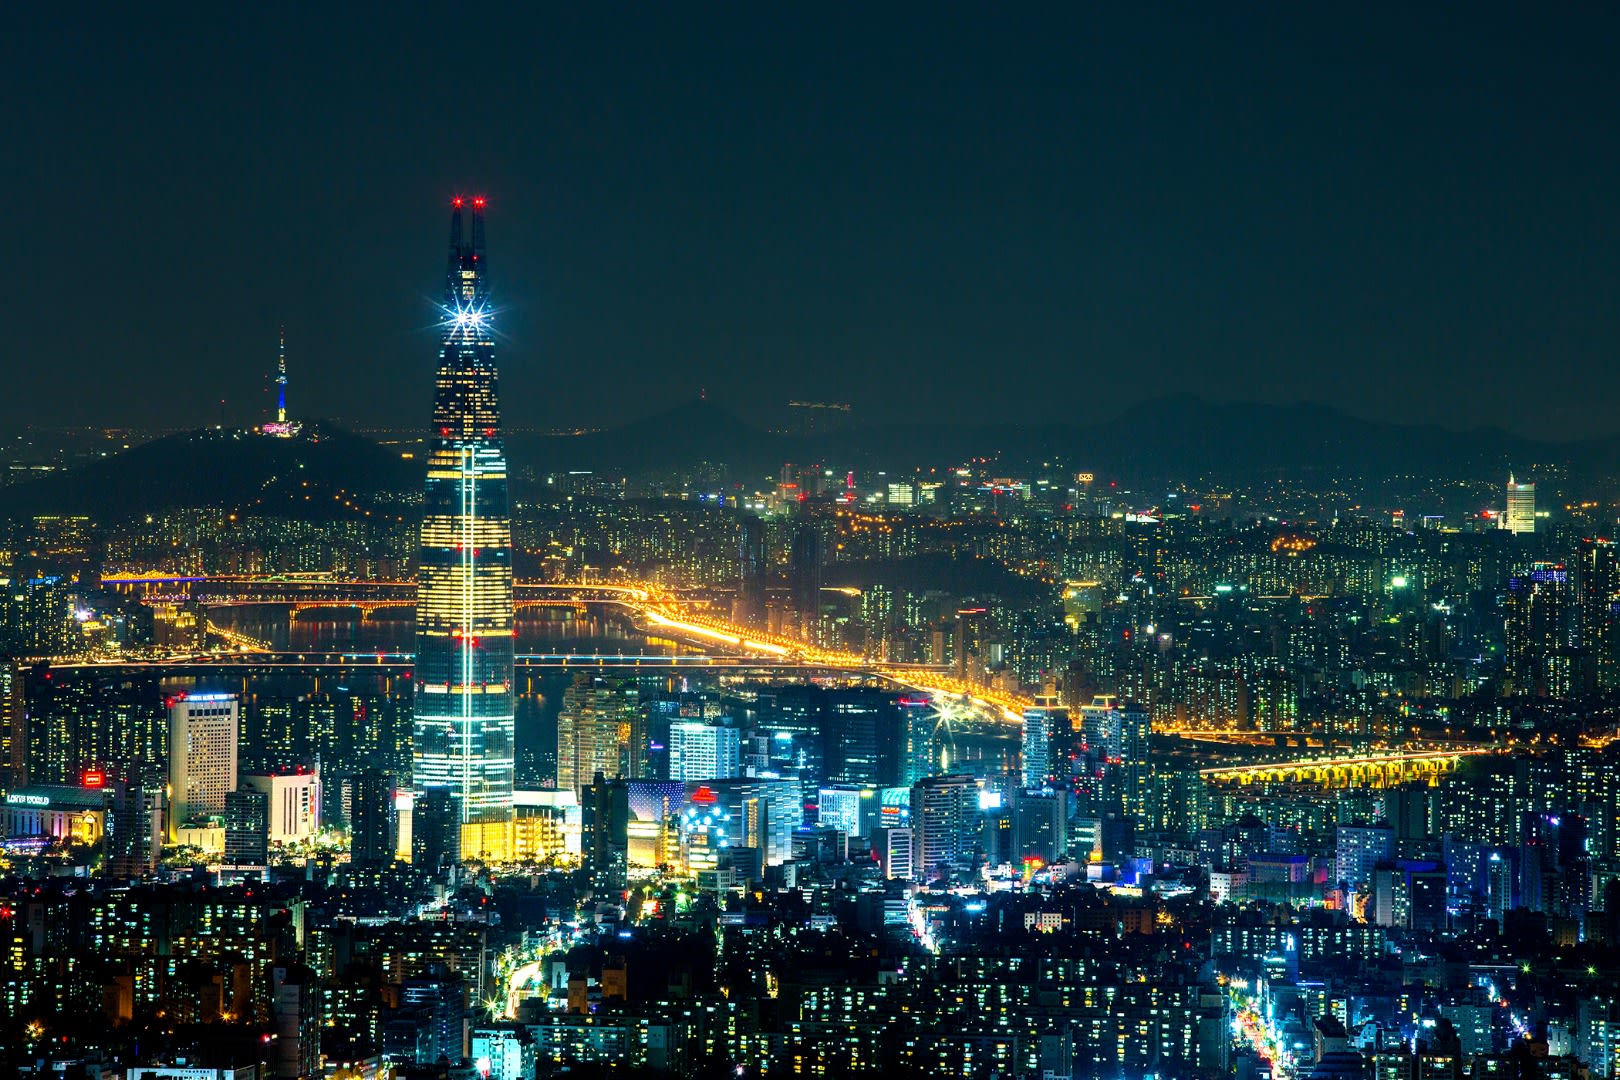 Seoul Sky Tower